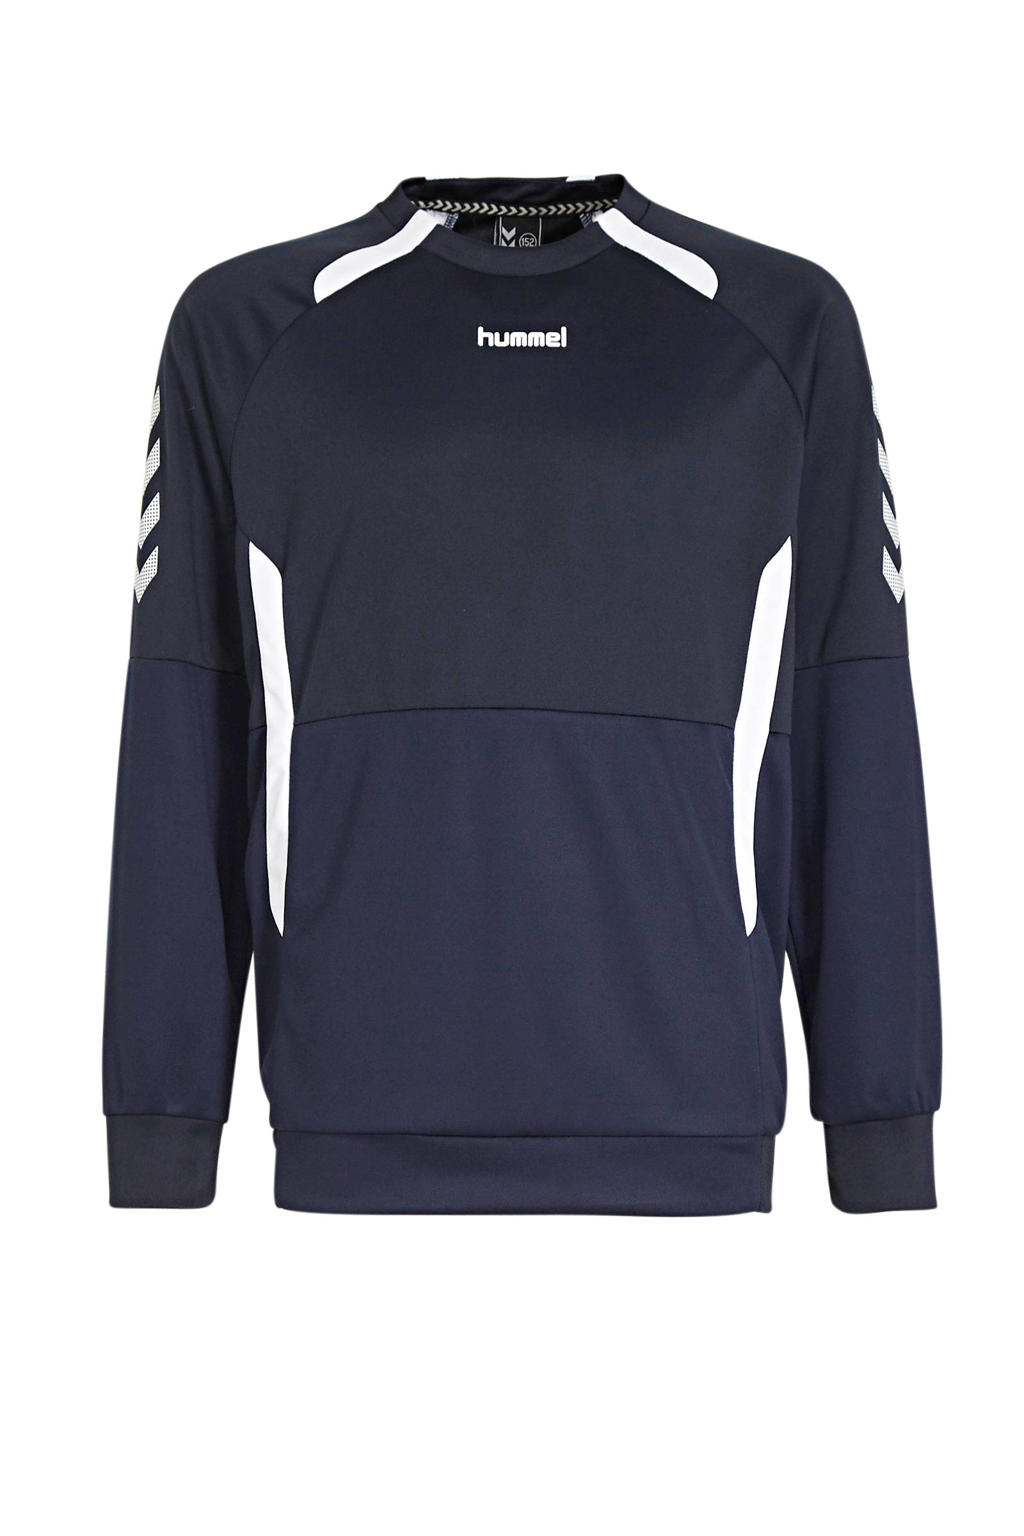 hummel Junior  sportsweater Authentic Top RN donkerblauw/wit